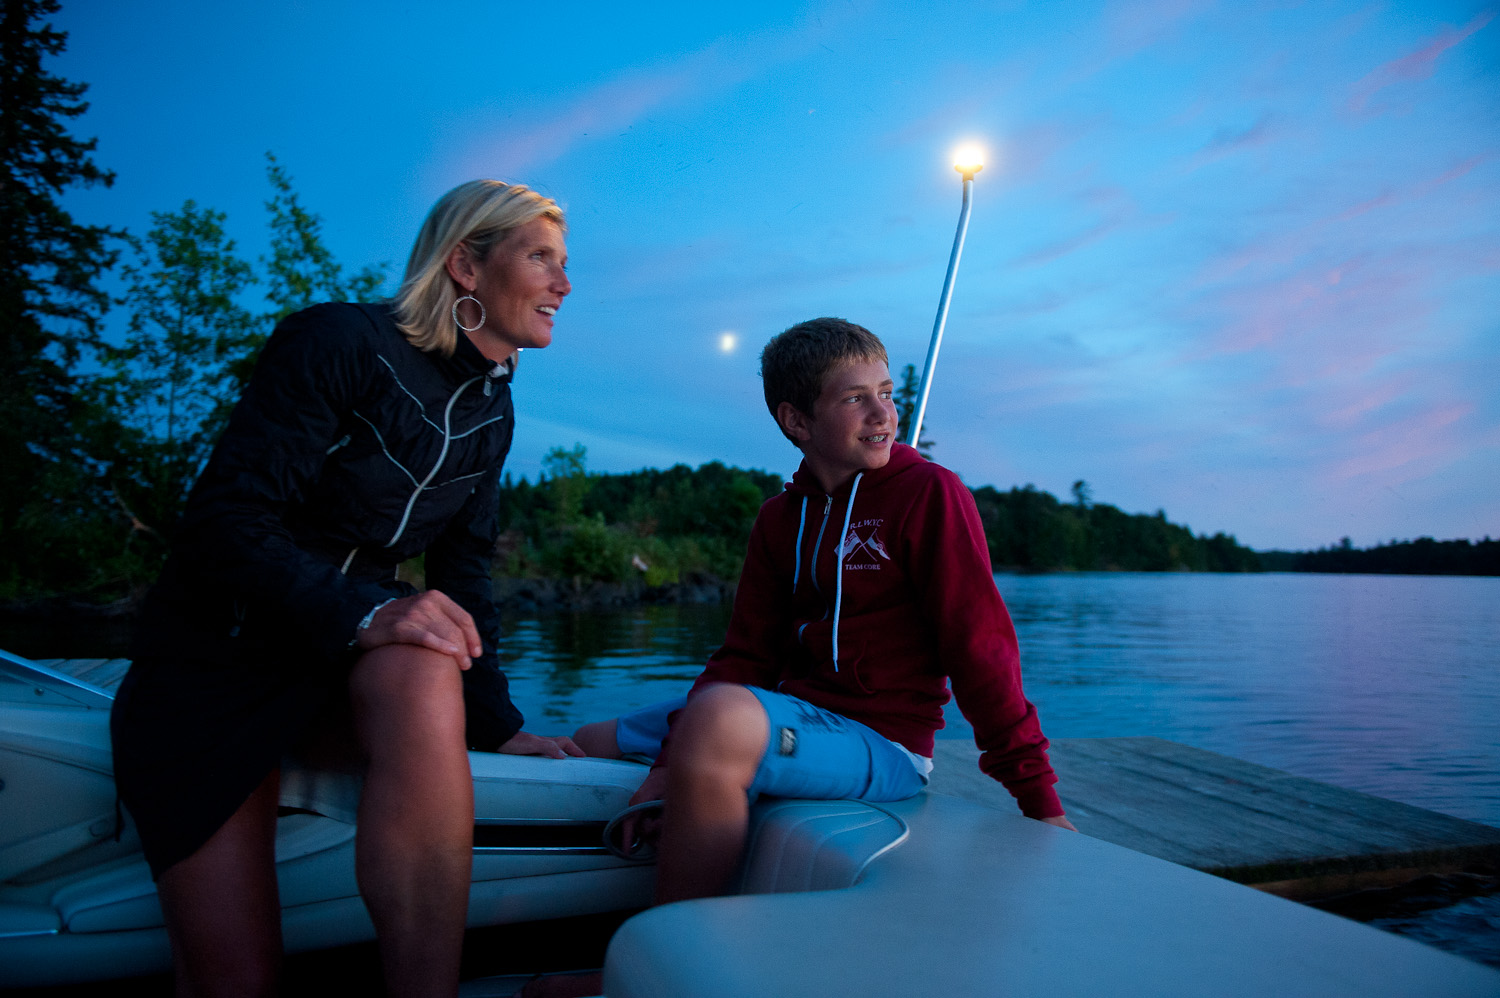 Lake boat at dusk by Winnipeg editorial photographer